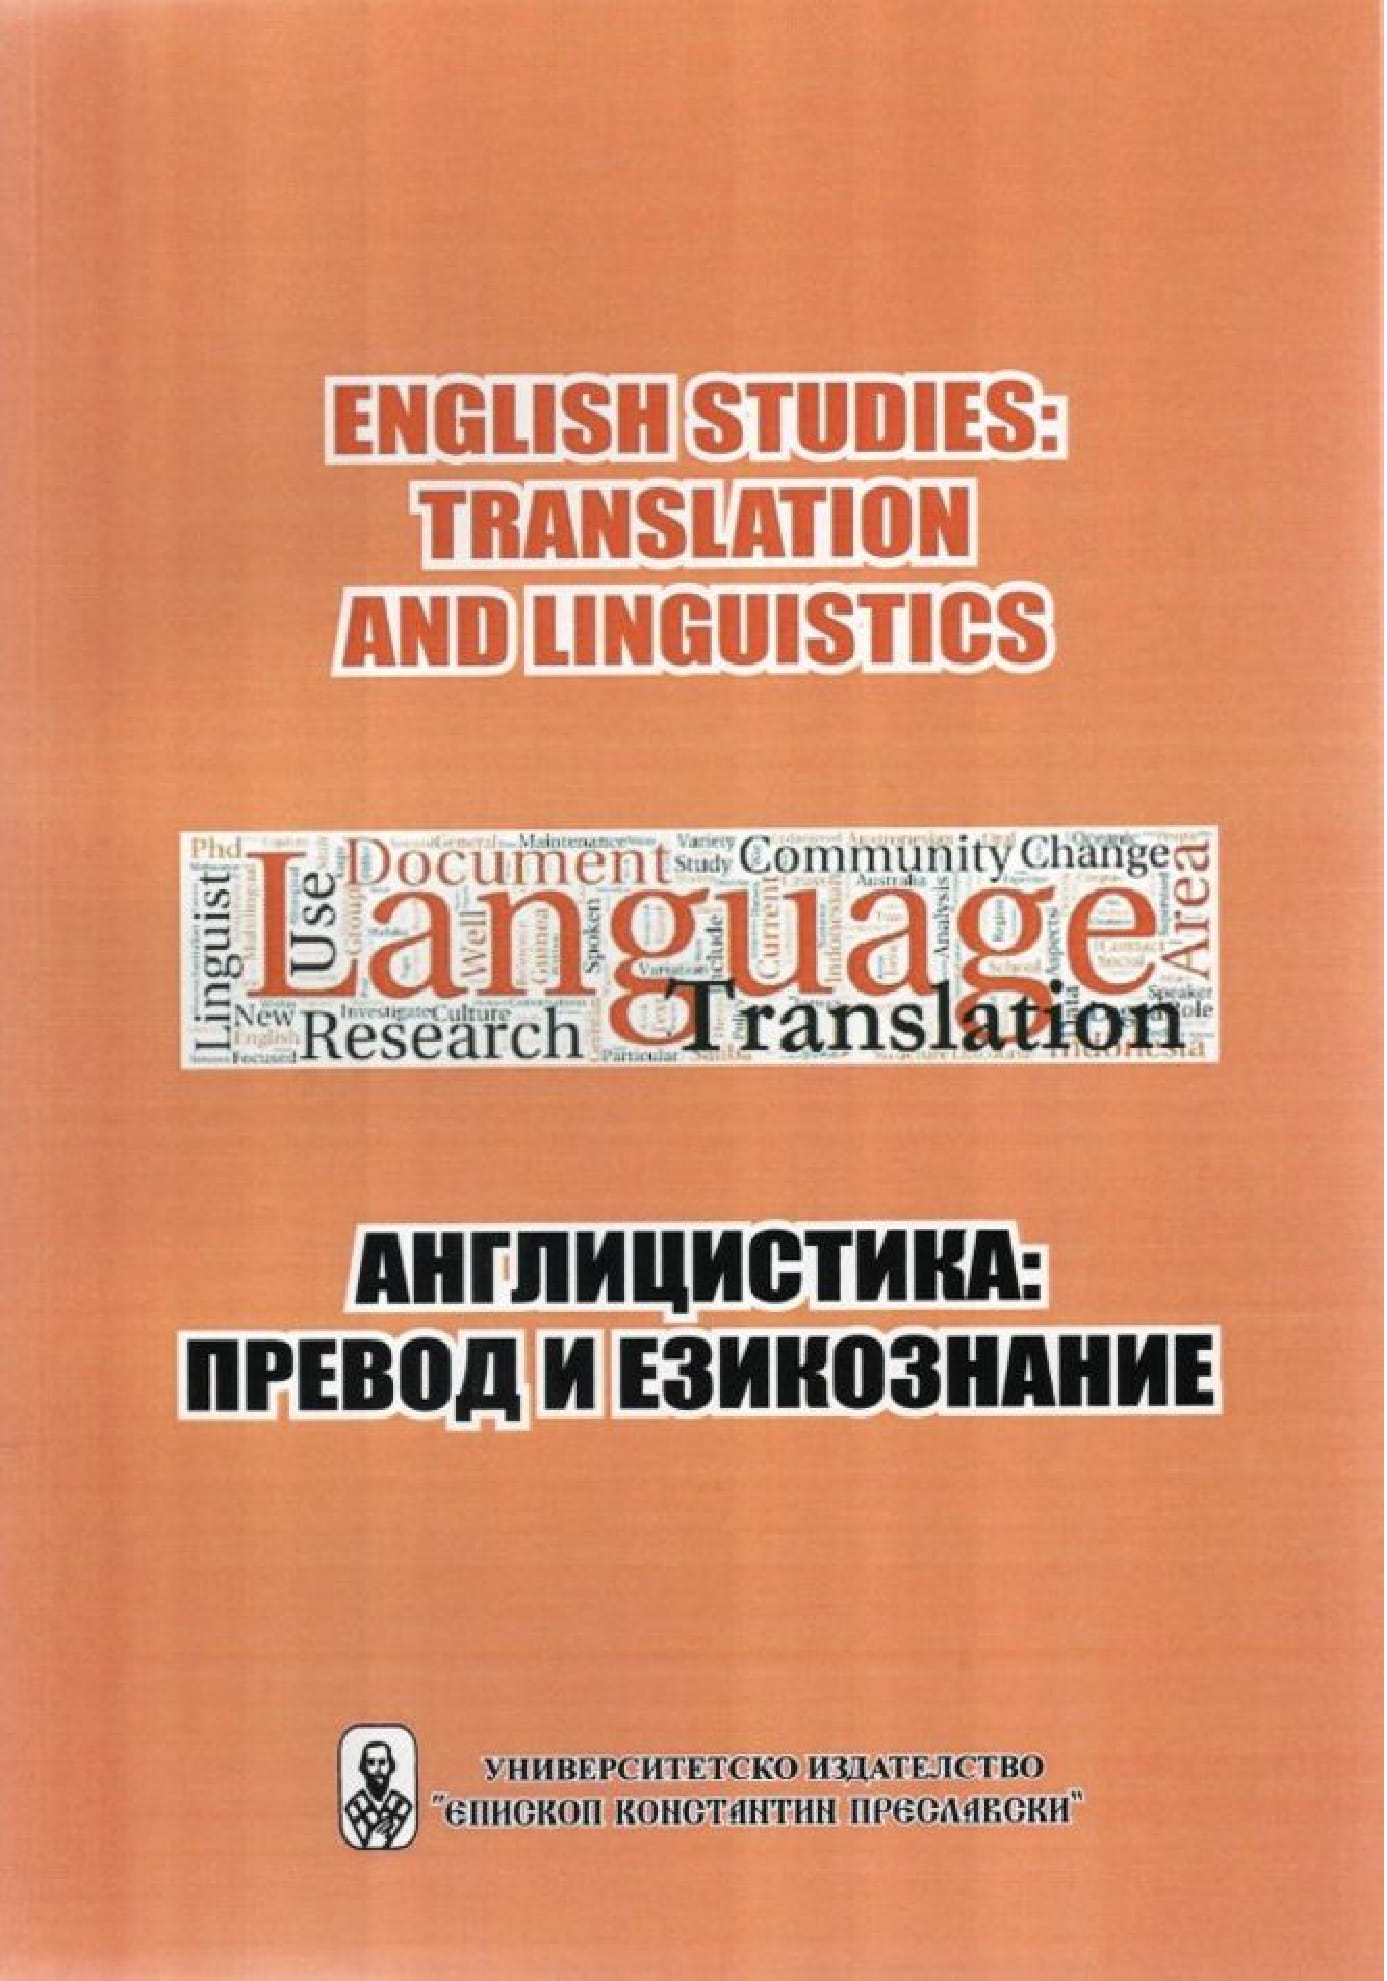 Translation Cover Image